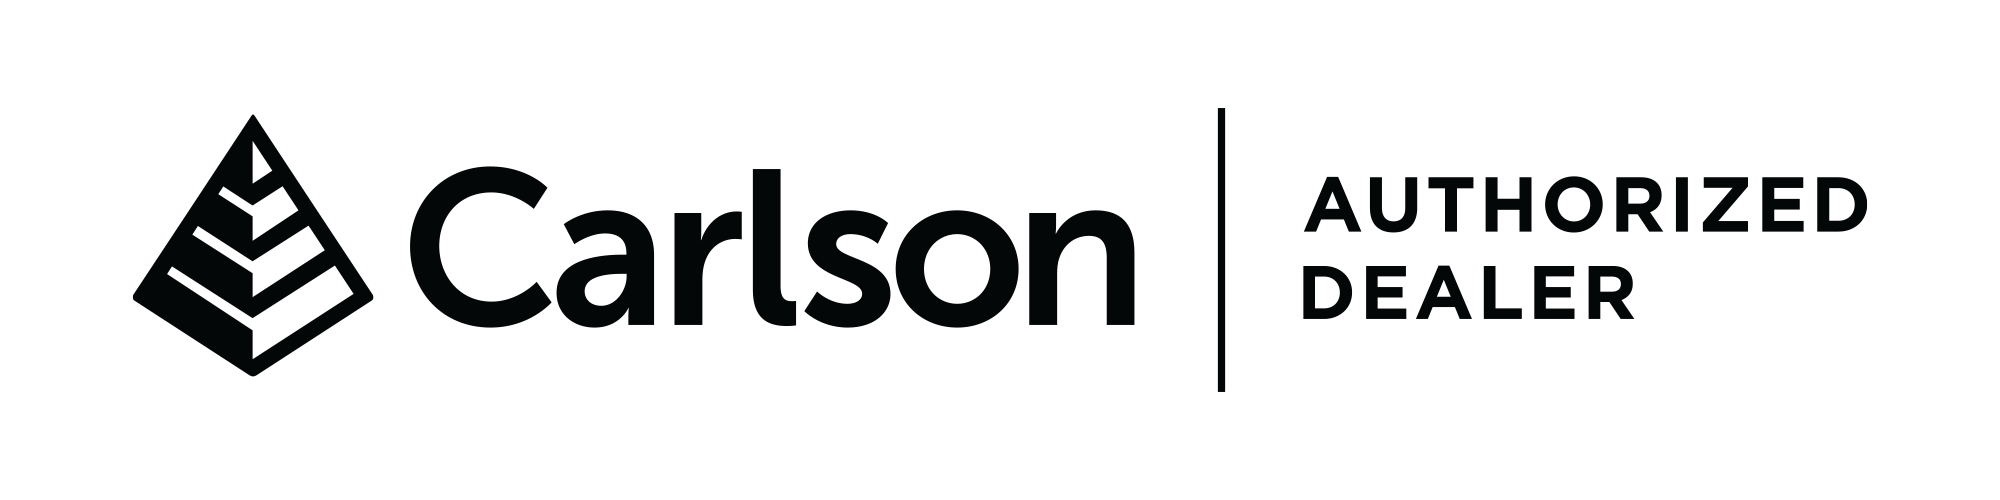 Carlson Software Distributor